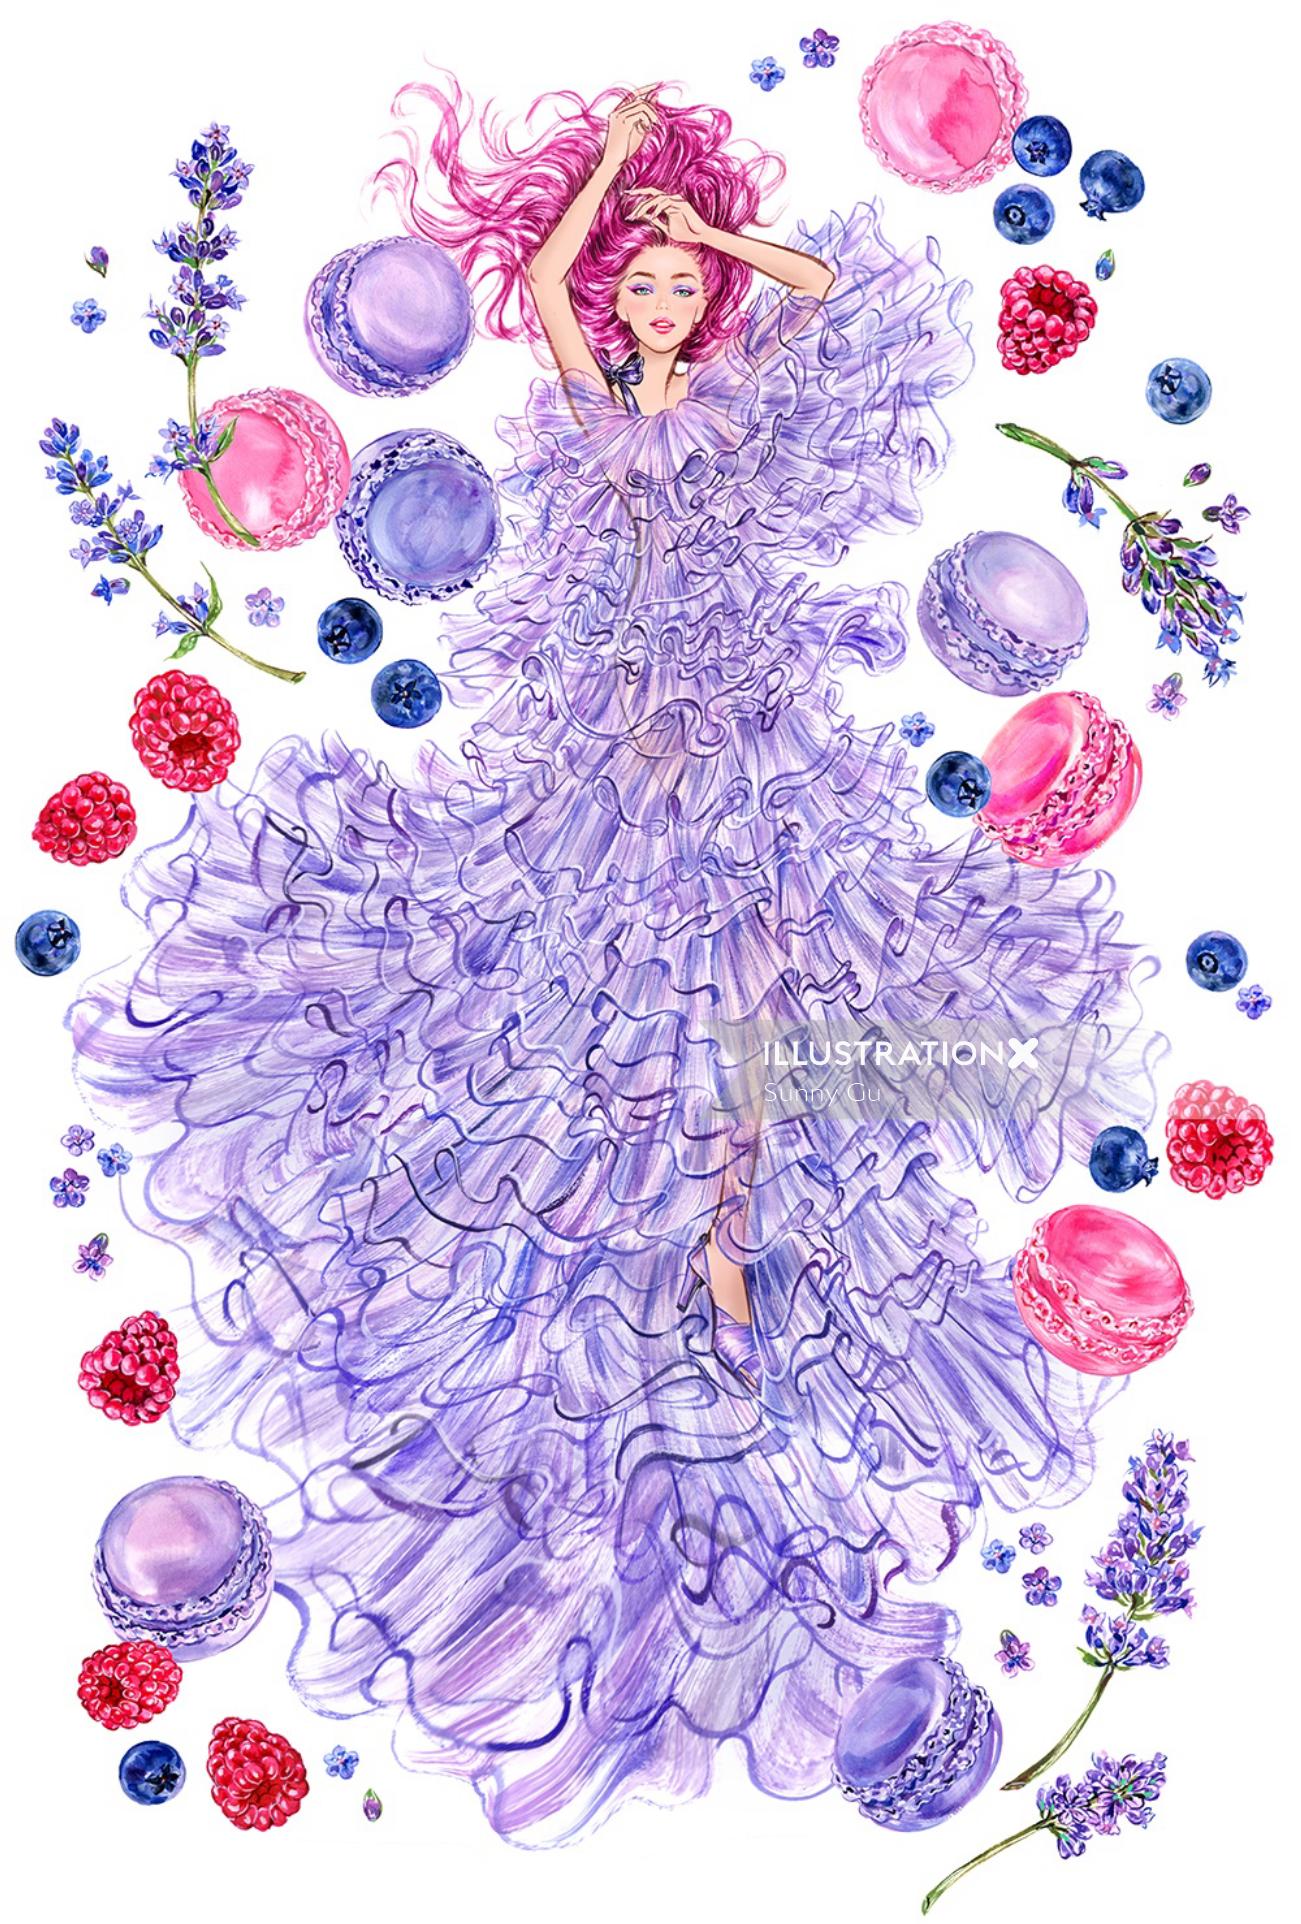 Watercolor illustration of fantasy girl